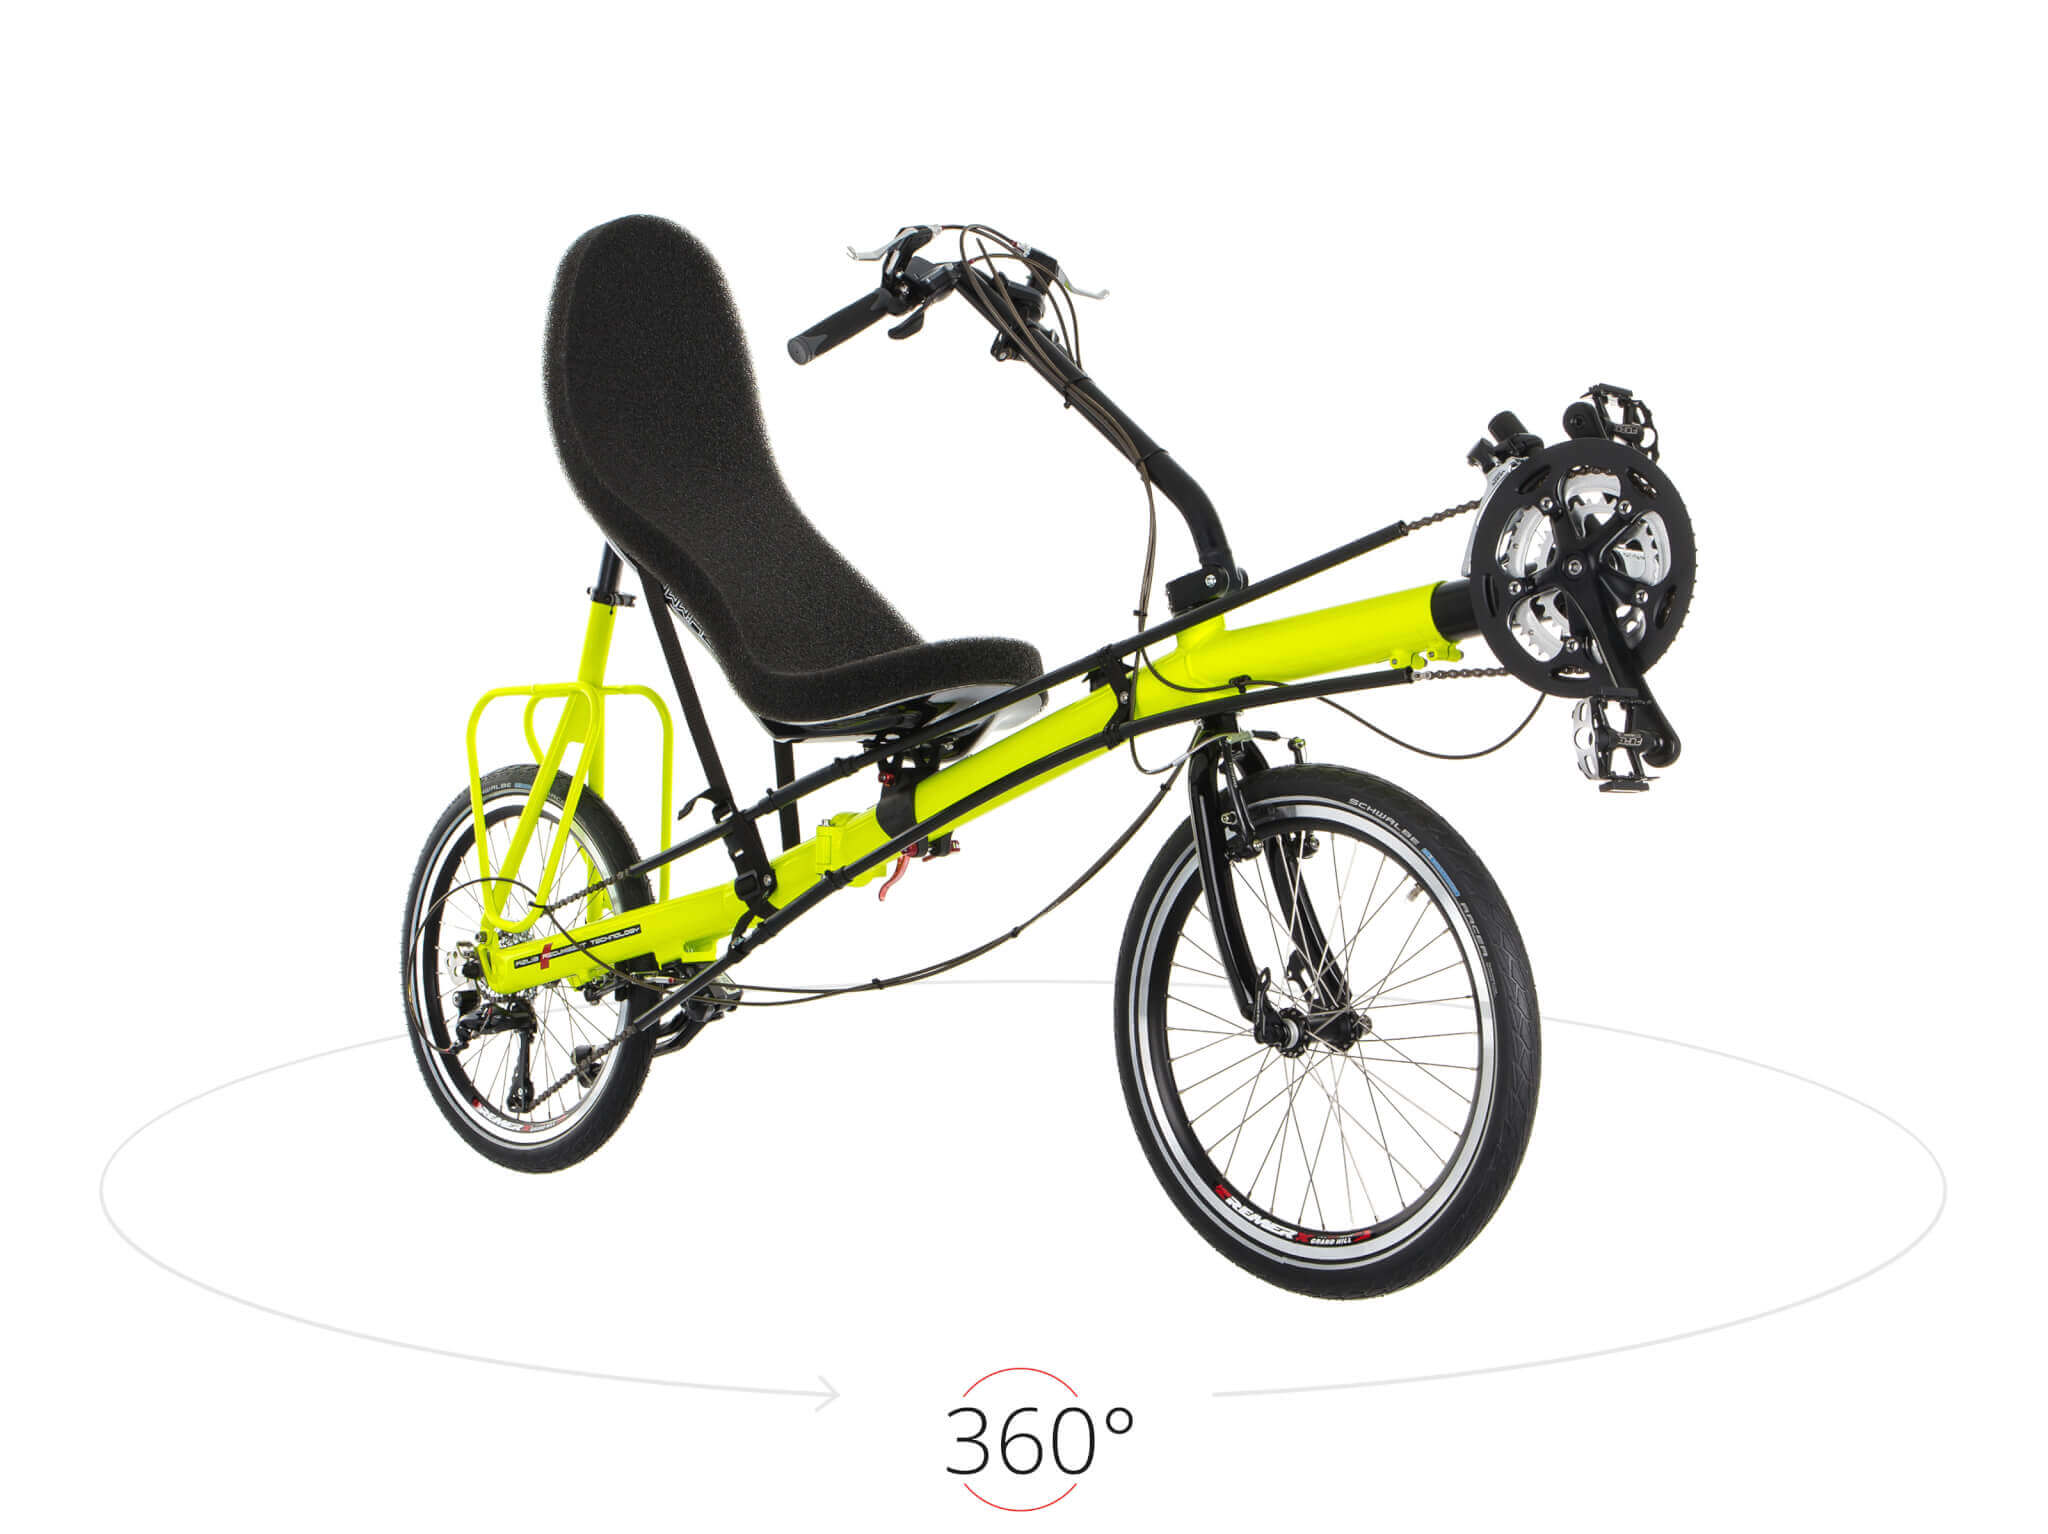 360 folding bike